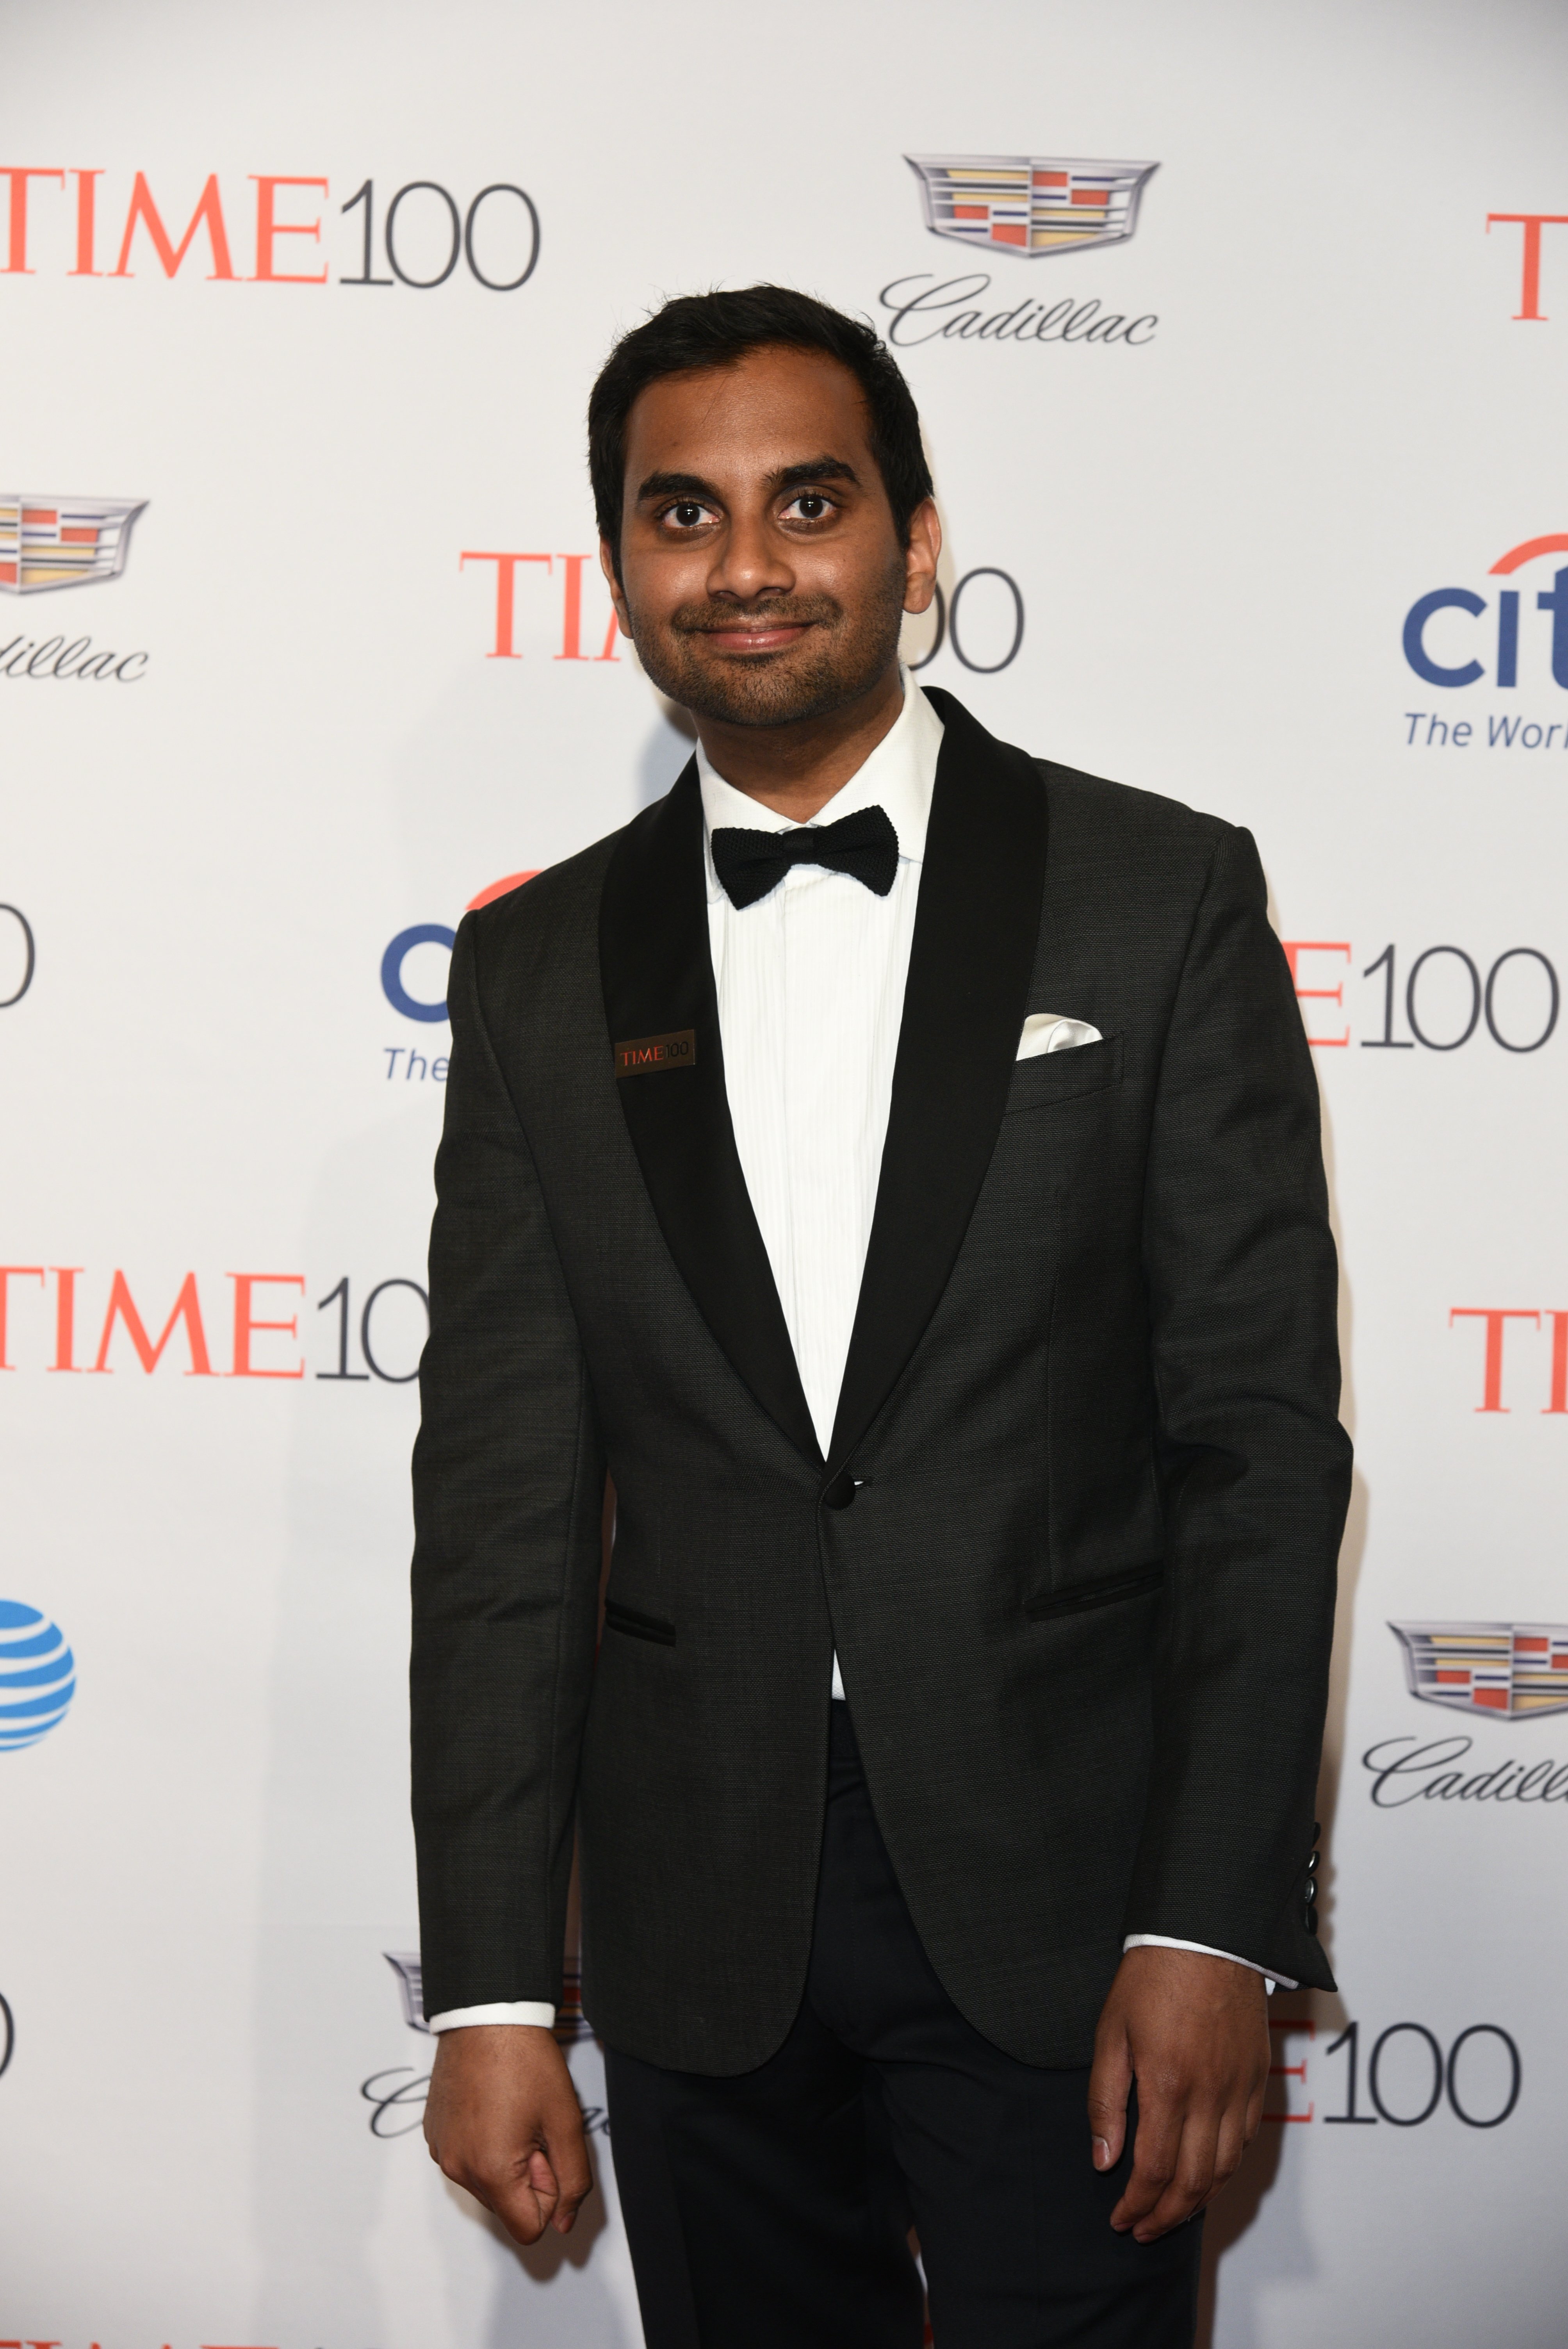 Aziz Ansari at the TIME 100 gala in New York on April 26, 2016.